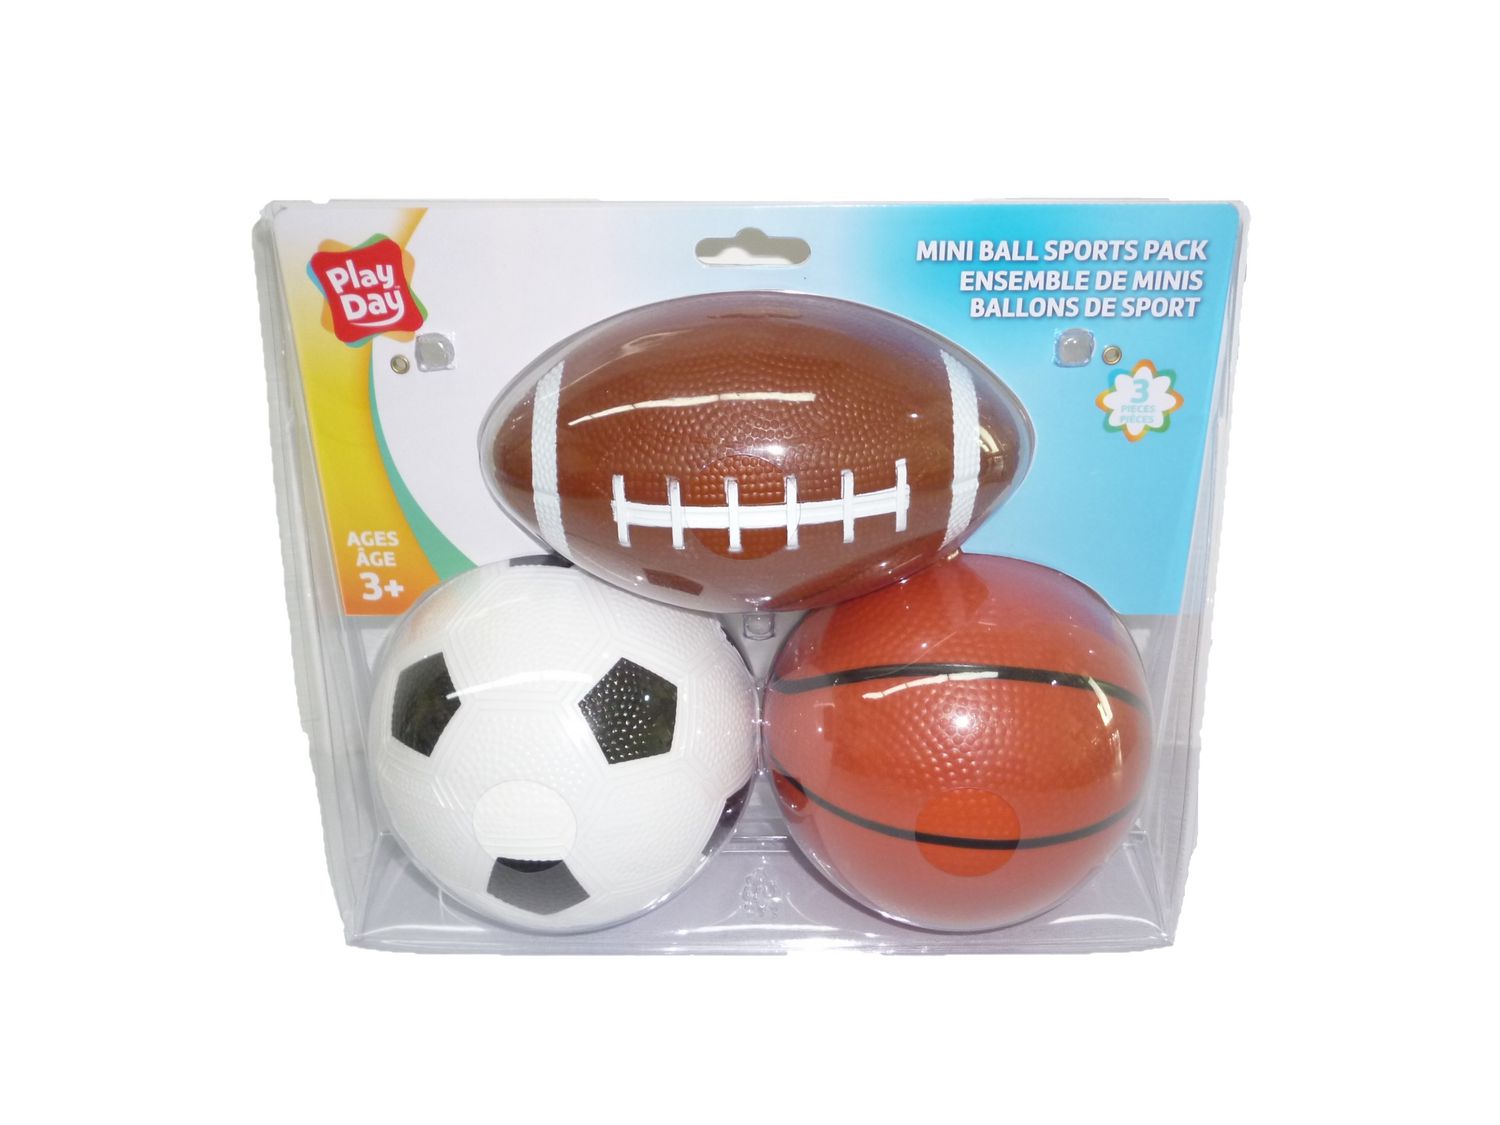 Play Day Mini Sports Balls Set Football Basketball Soccer Ball NEW 